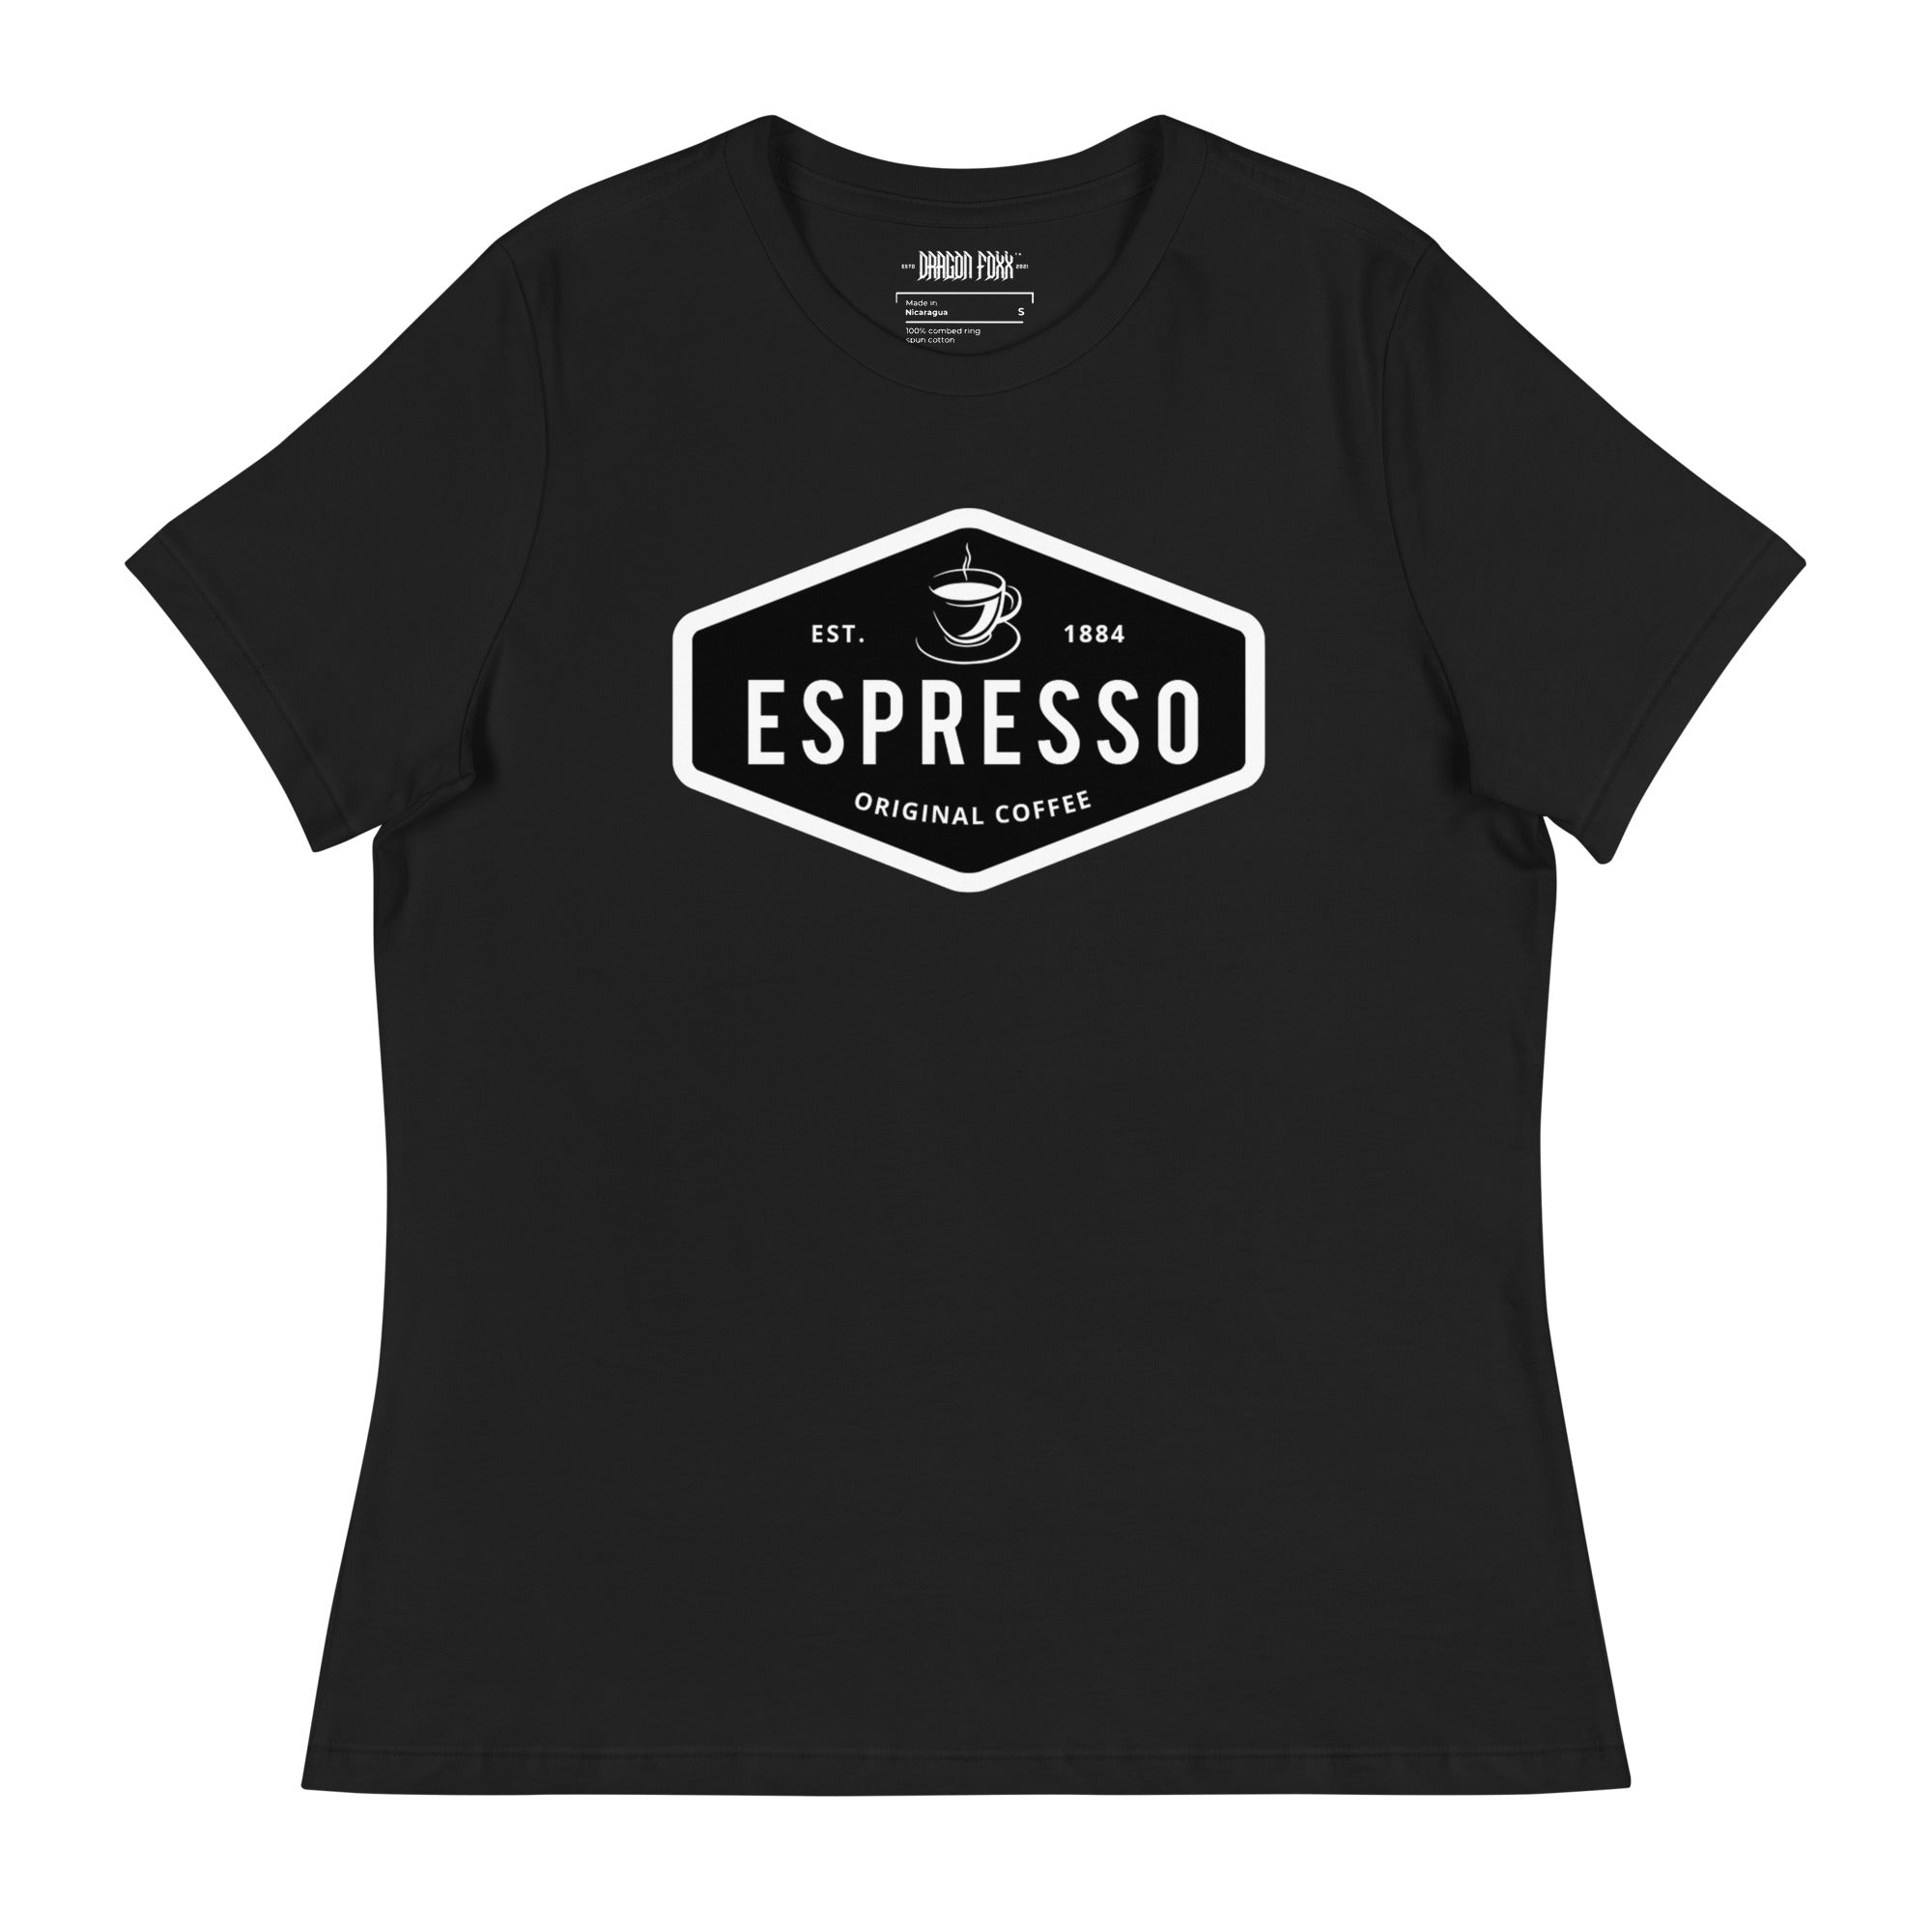 ESPRESSO - Women's Relaxed Fit Graphic T-Shirt in 16 Colors - Women's Relaxed Fit Graphic T-Shirt - DRAGON FOXX™ - 7218598_10187 - Black - S - Athletic Heather T-shirt - Berry T-shirt - Black T-shirt